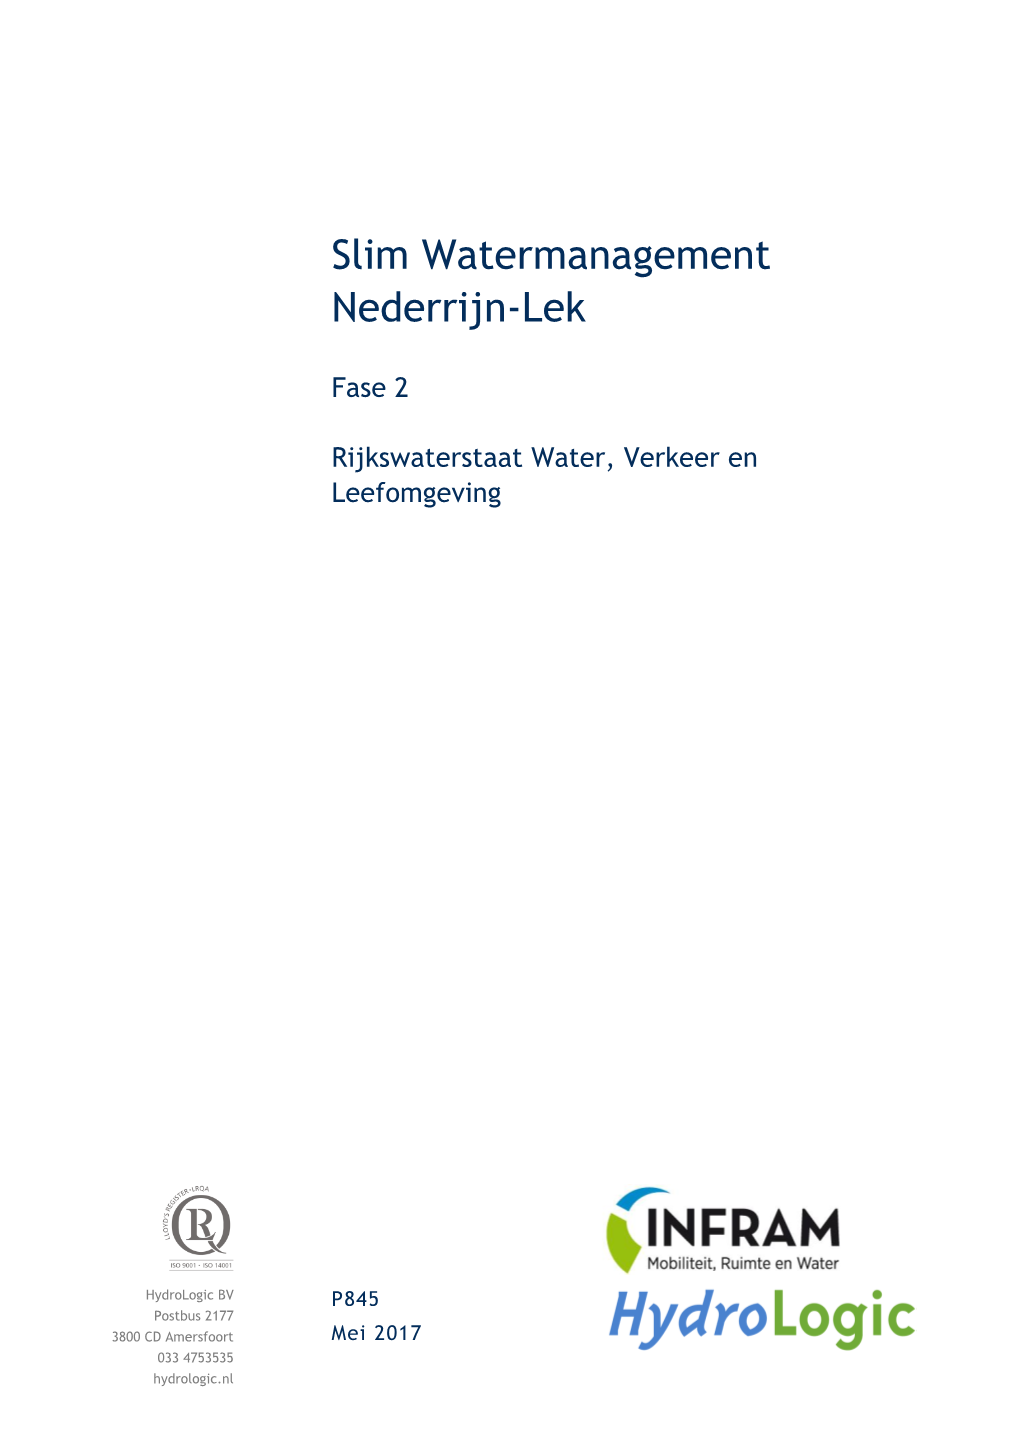 Slim Watermanagement Nederrijn-Lek